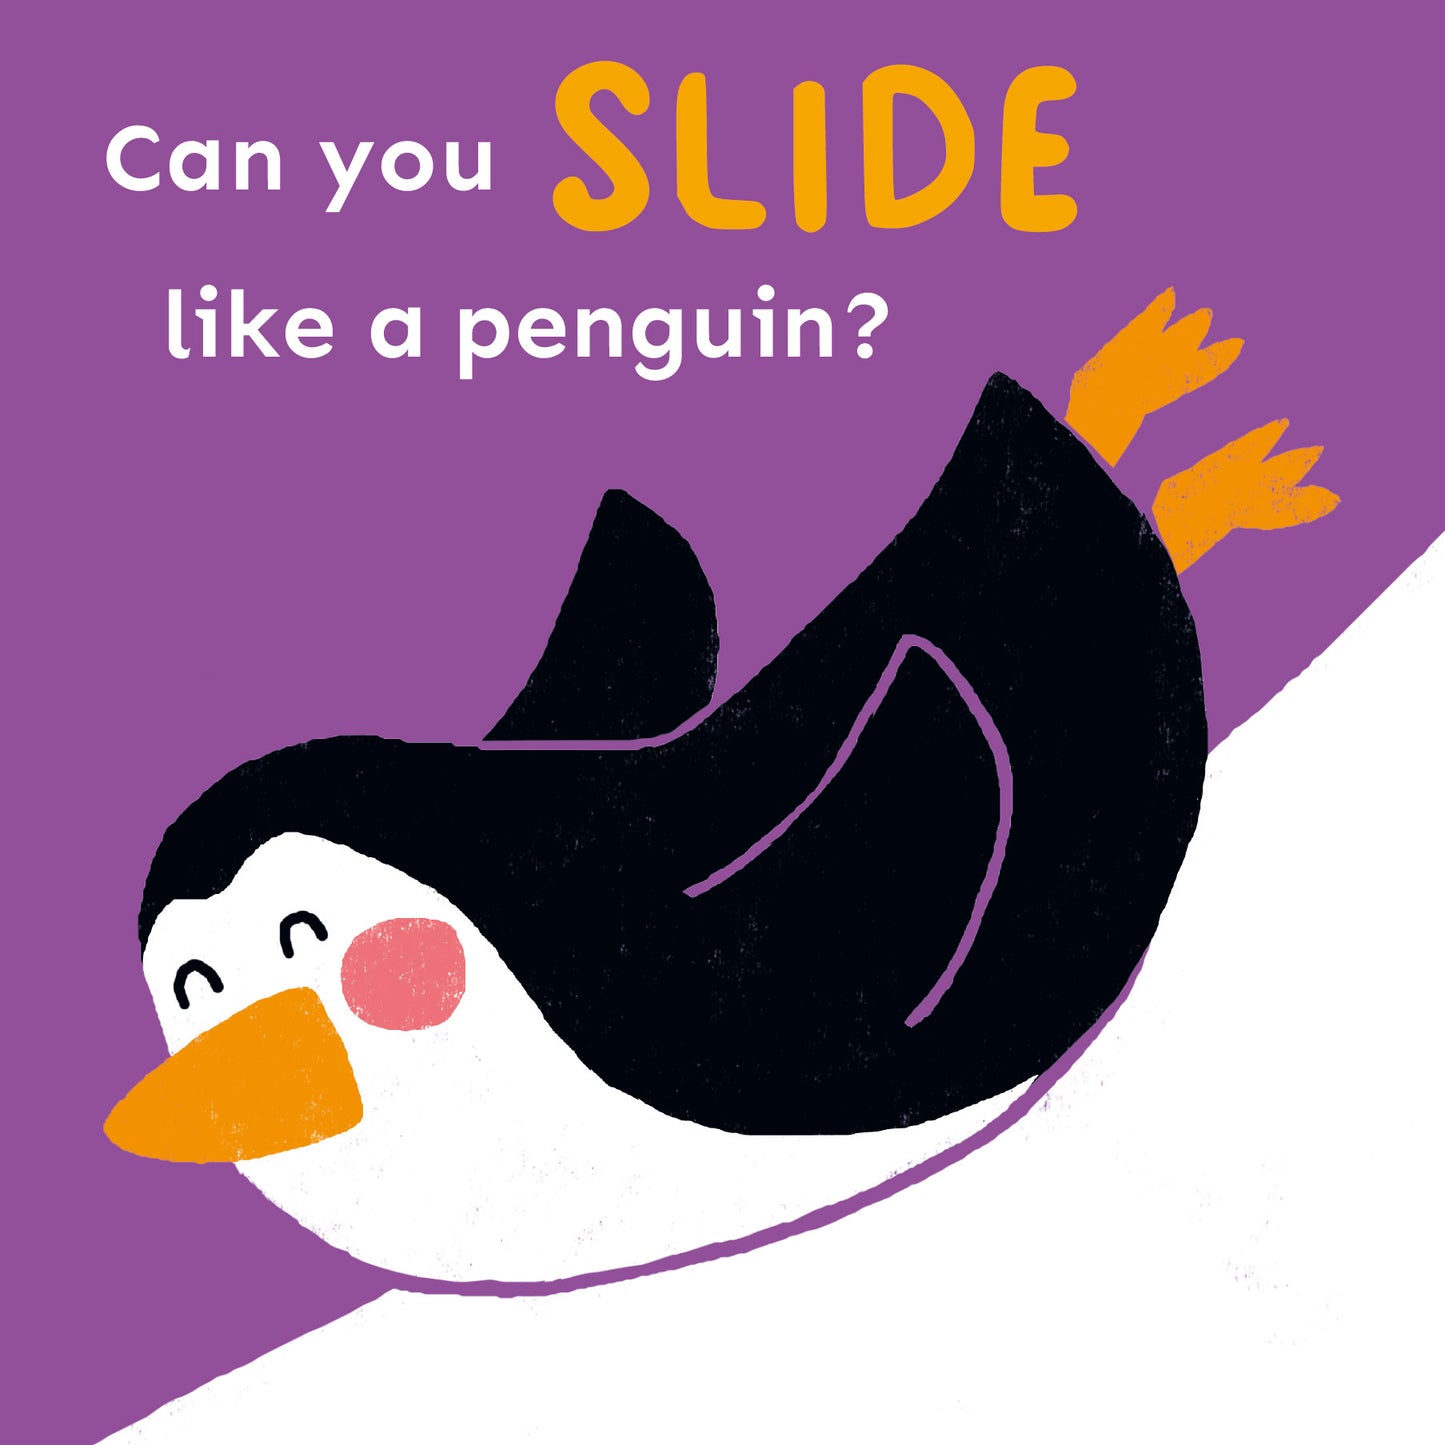 Can You Slide Like a Penguin?